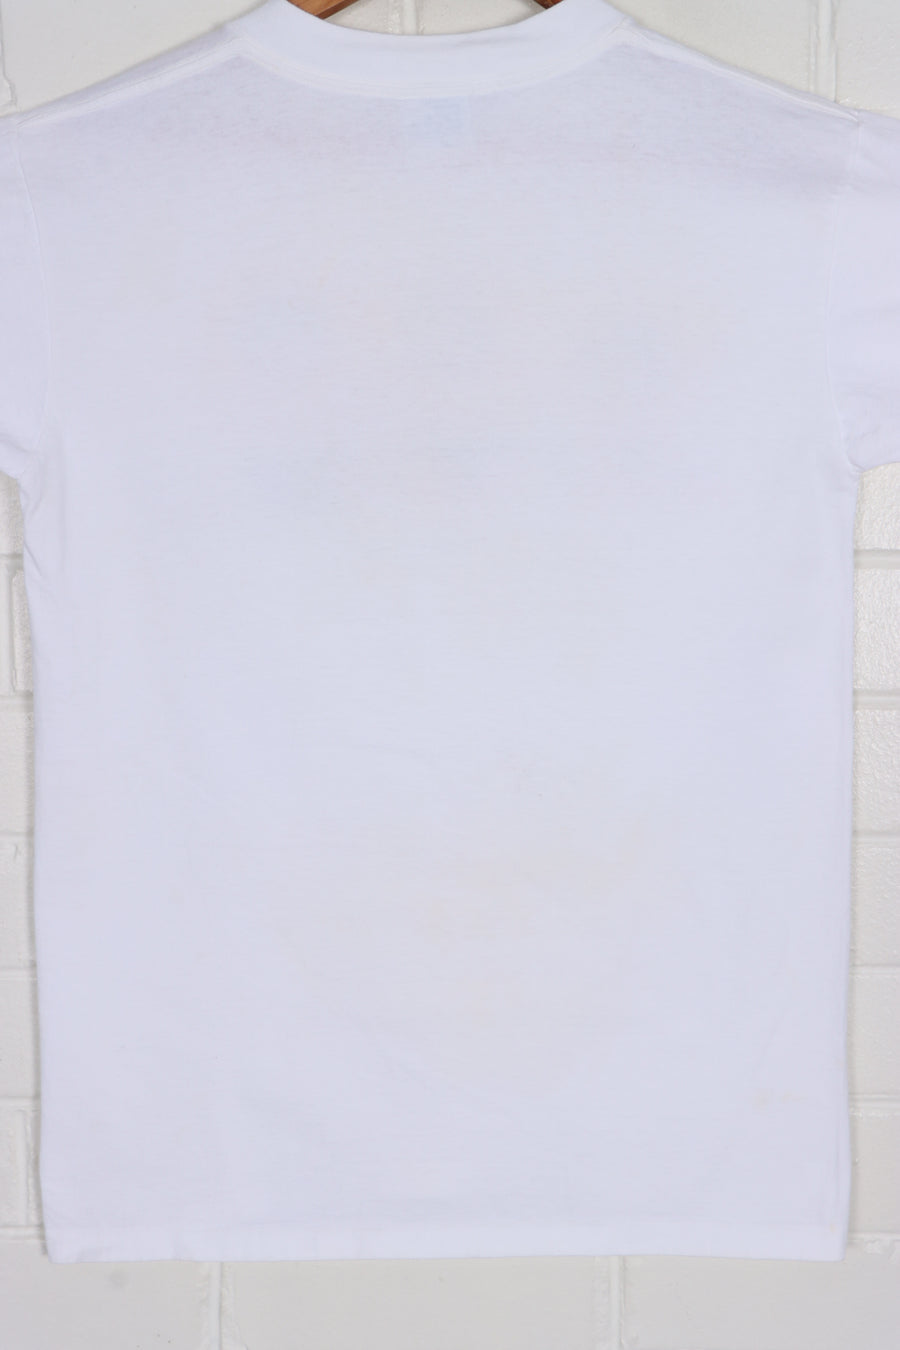 Anne Geddes 1995 Sunflower Babies Single Stitch T-Shirt USA Made (M)